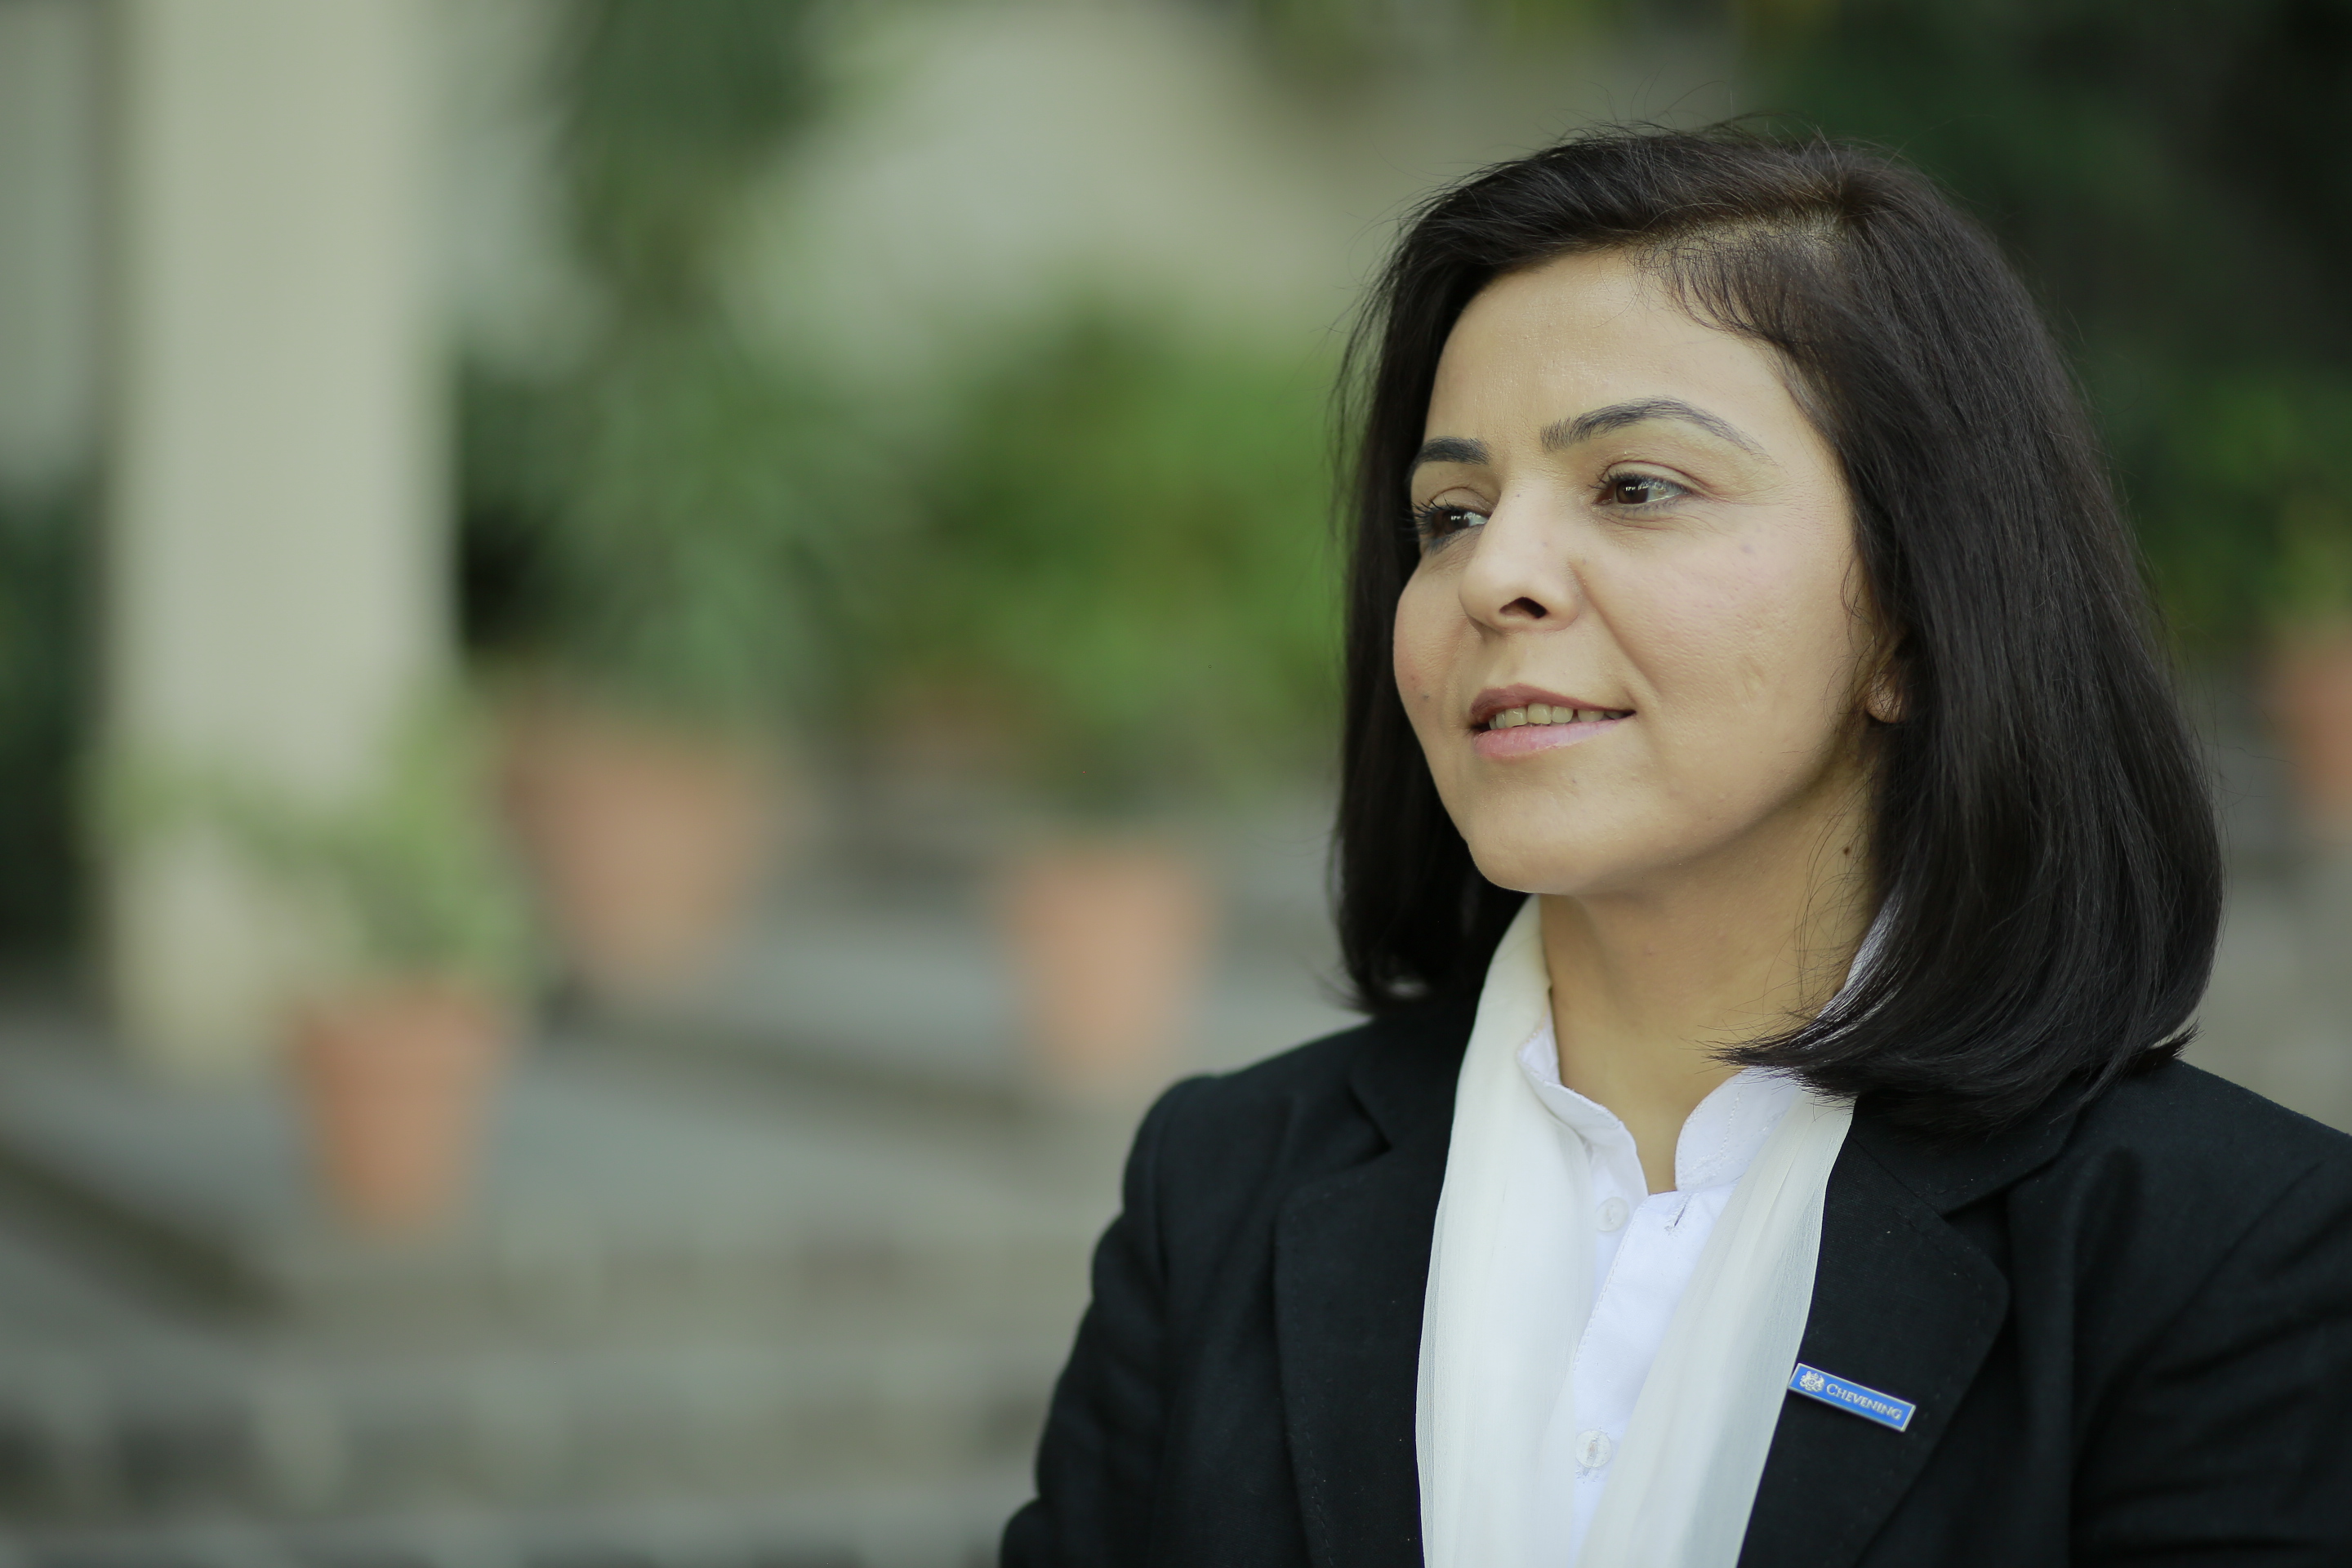 Amna Zamir Shah, Changemaker